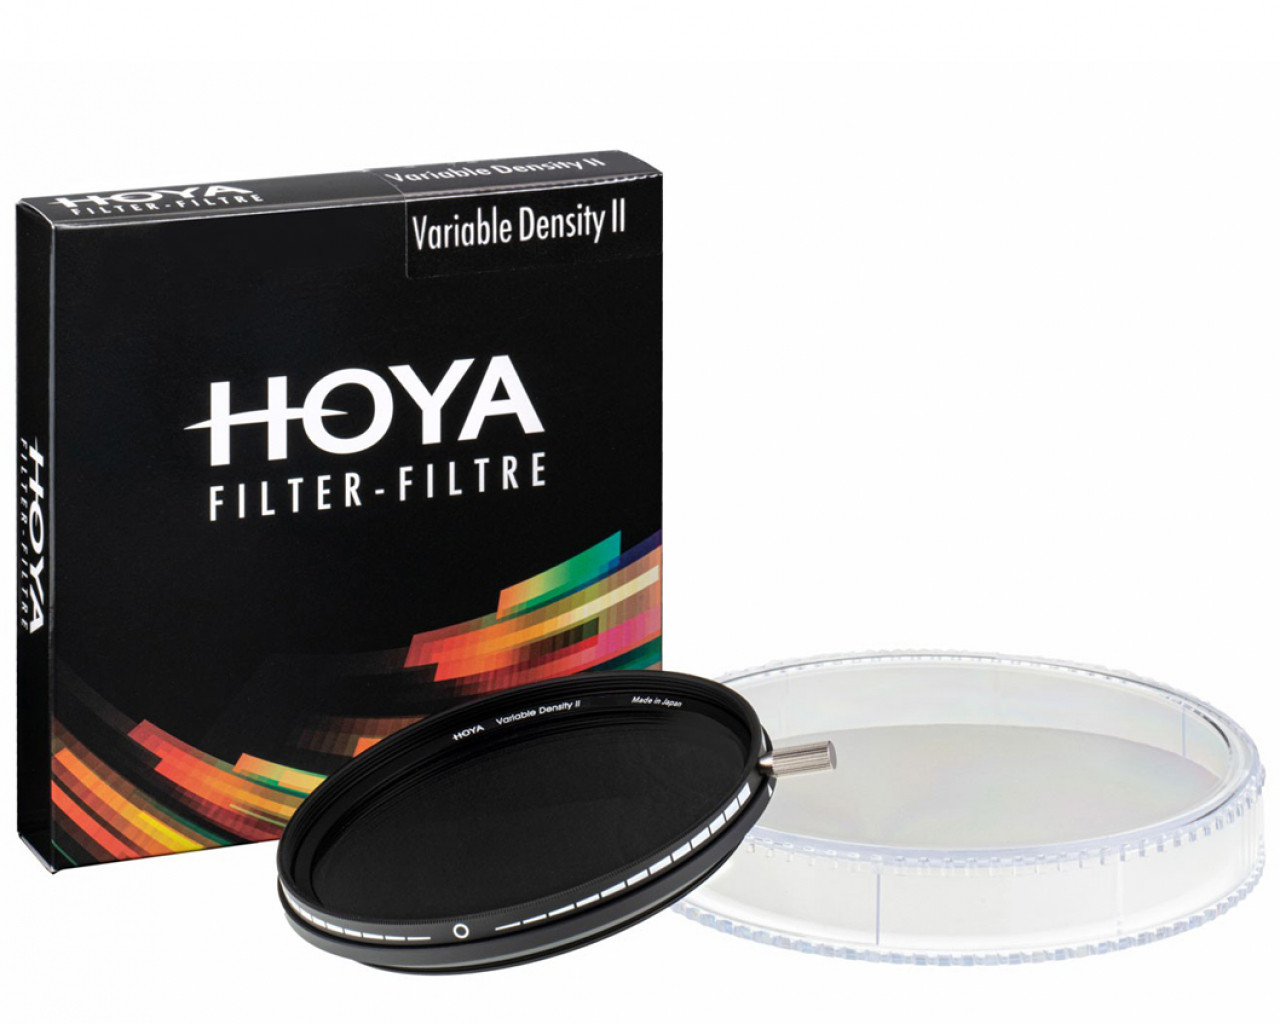 Hoya Filtro Vario-ND II 62mm